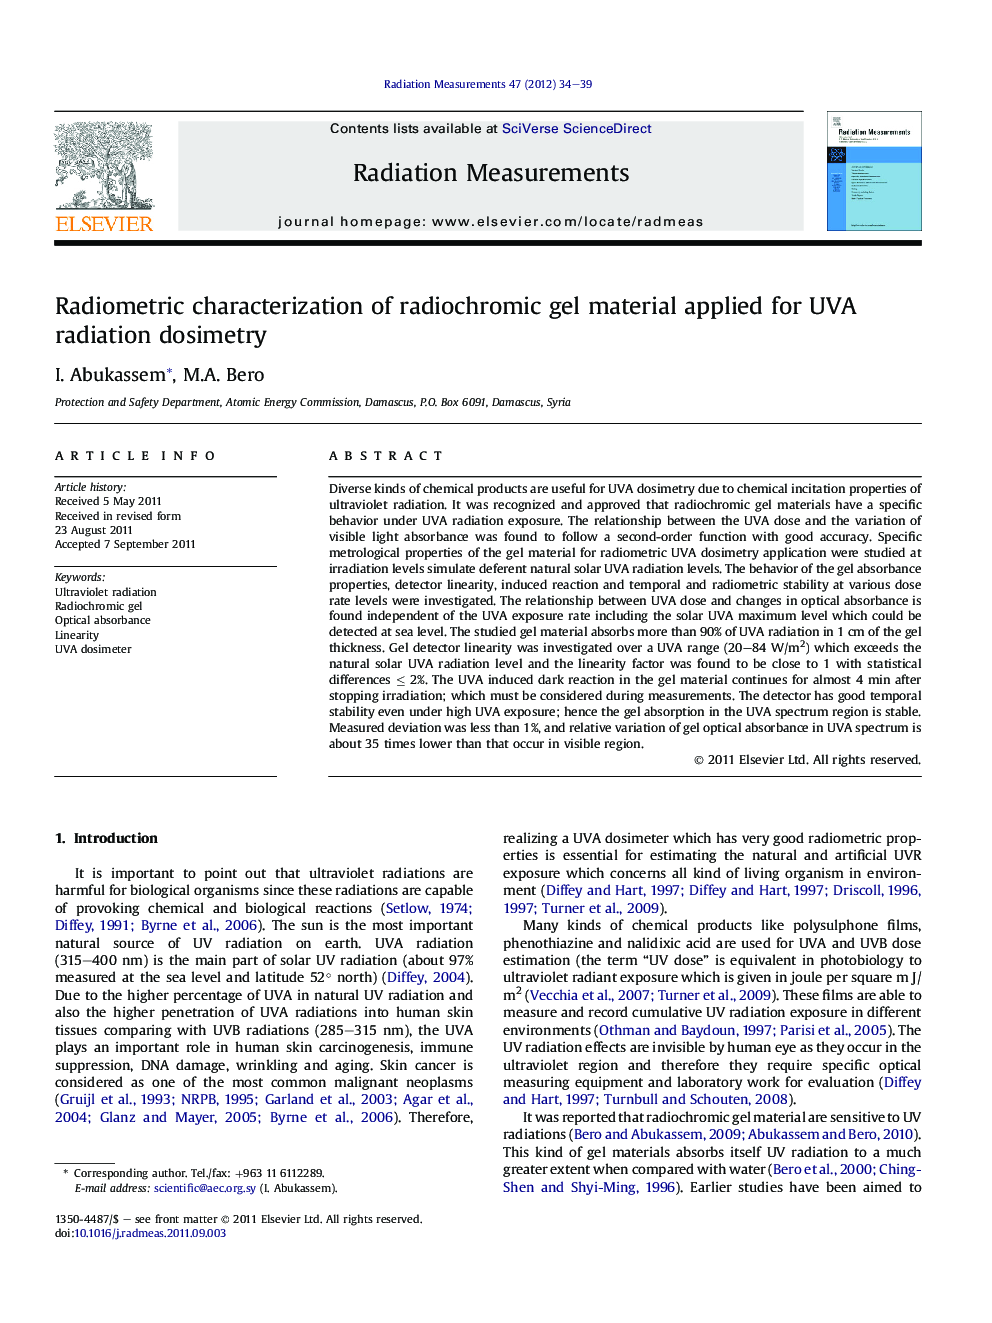 Radiometric characterization of radiochromic gel material applied for UVA radiation dosimetry